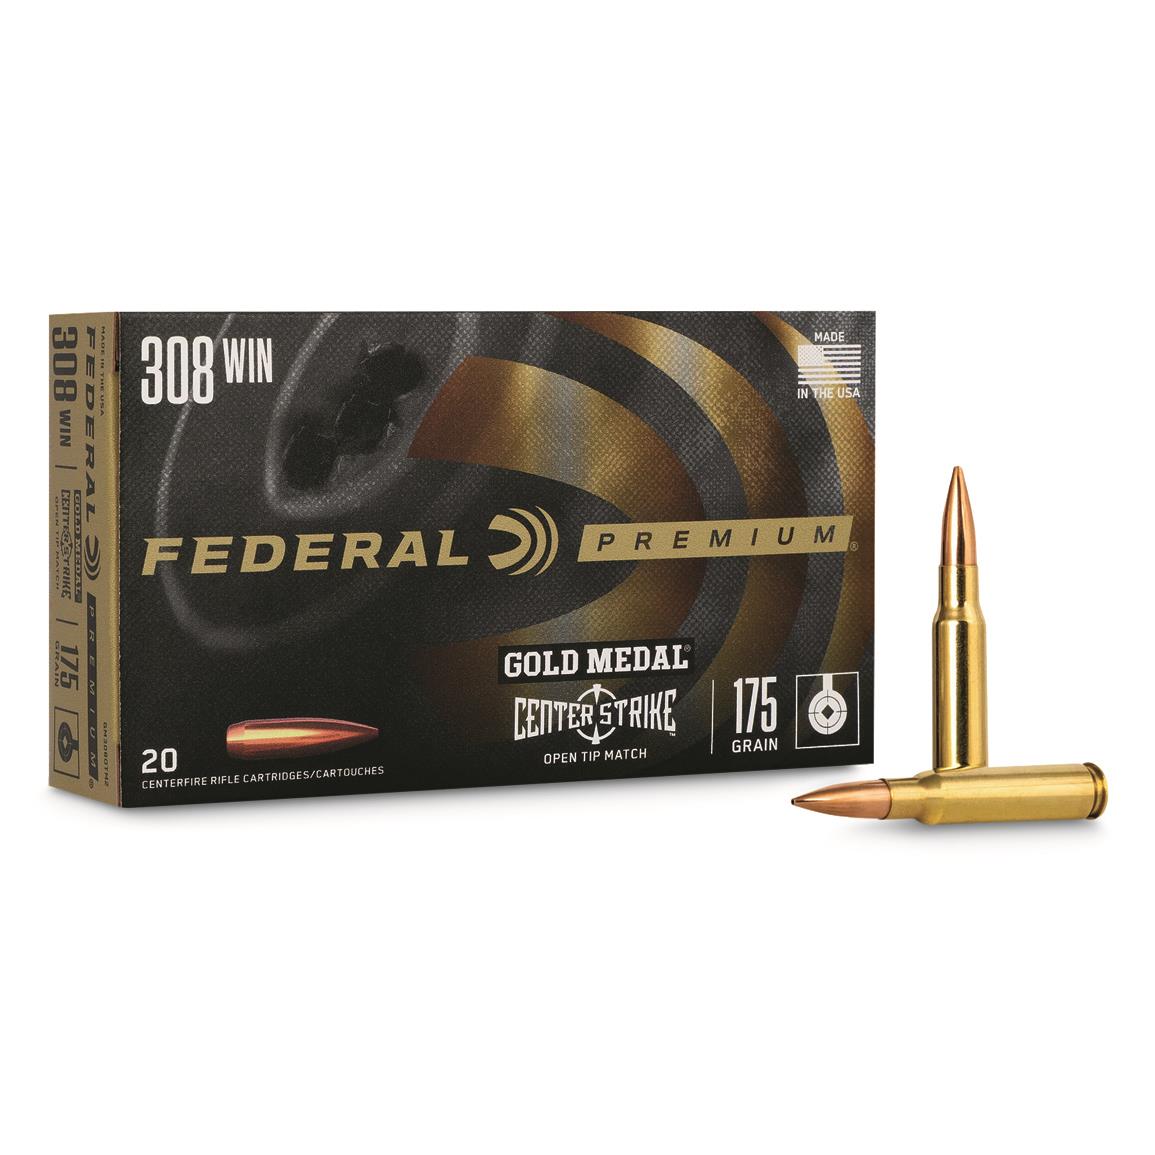 Federal Premium Gold Medal CenterStrike, .308 Winchester, OTM, 175 Grain, 20 Rounds